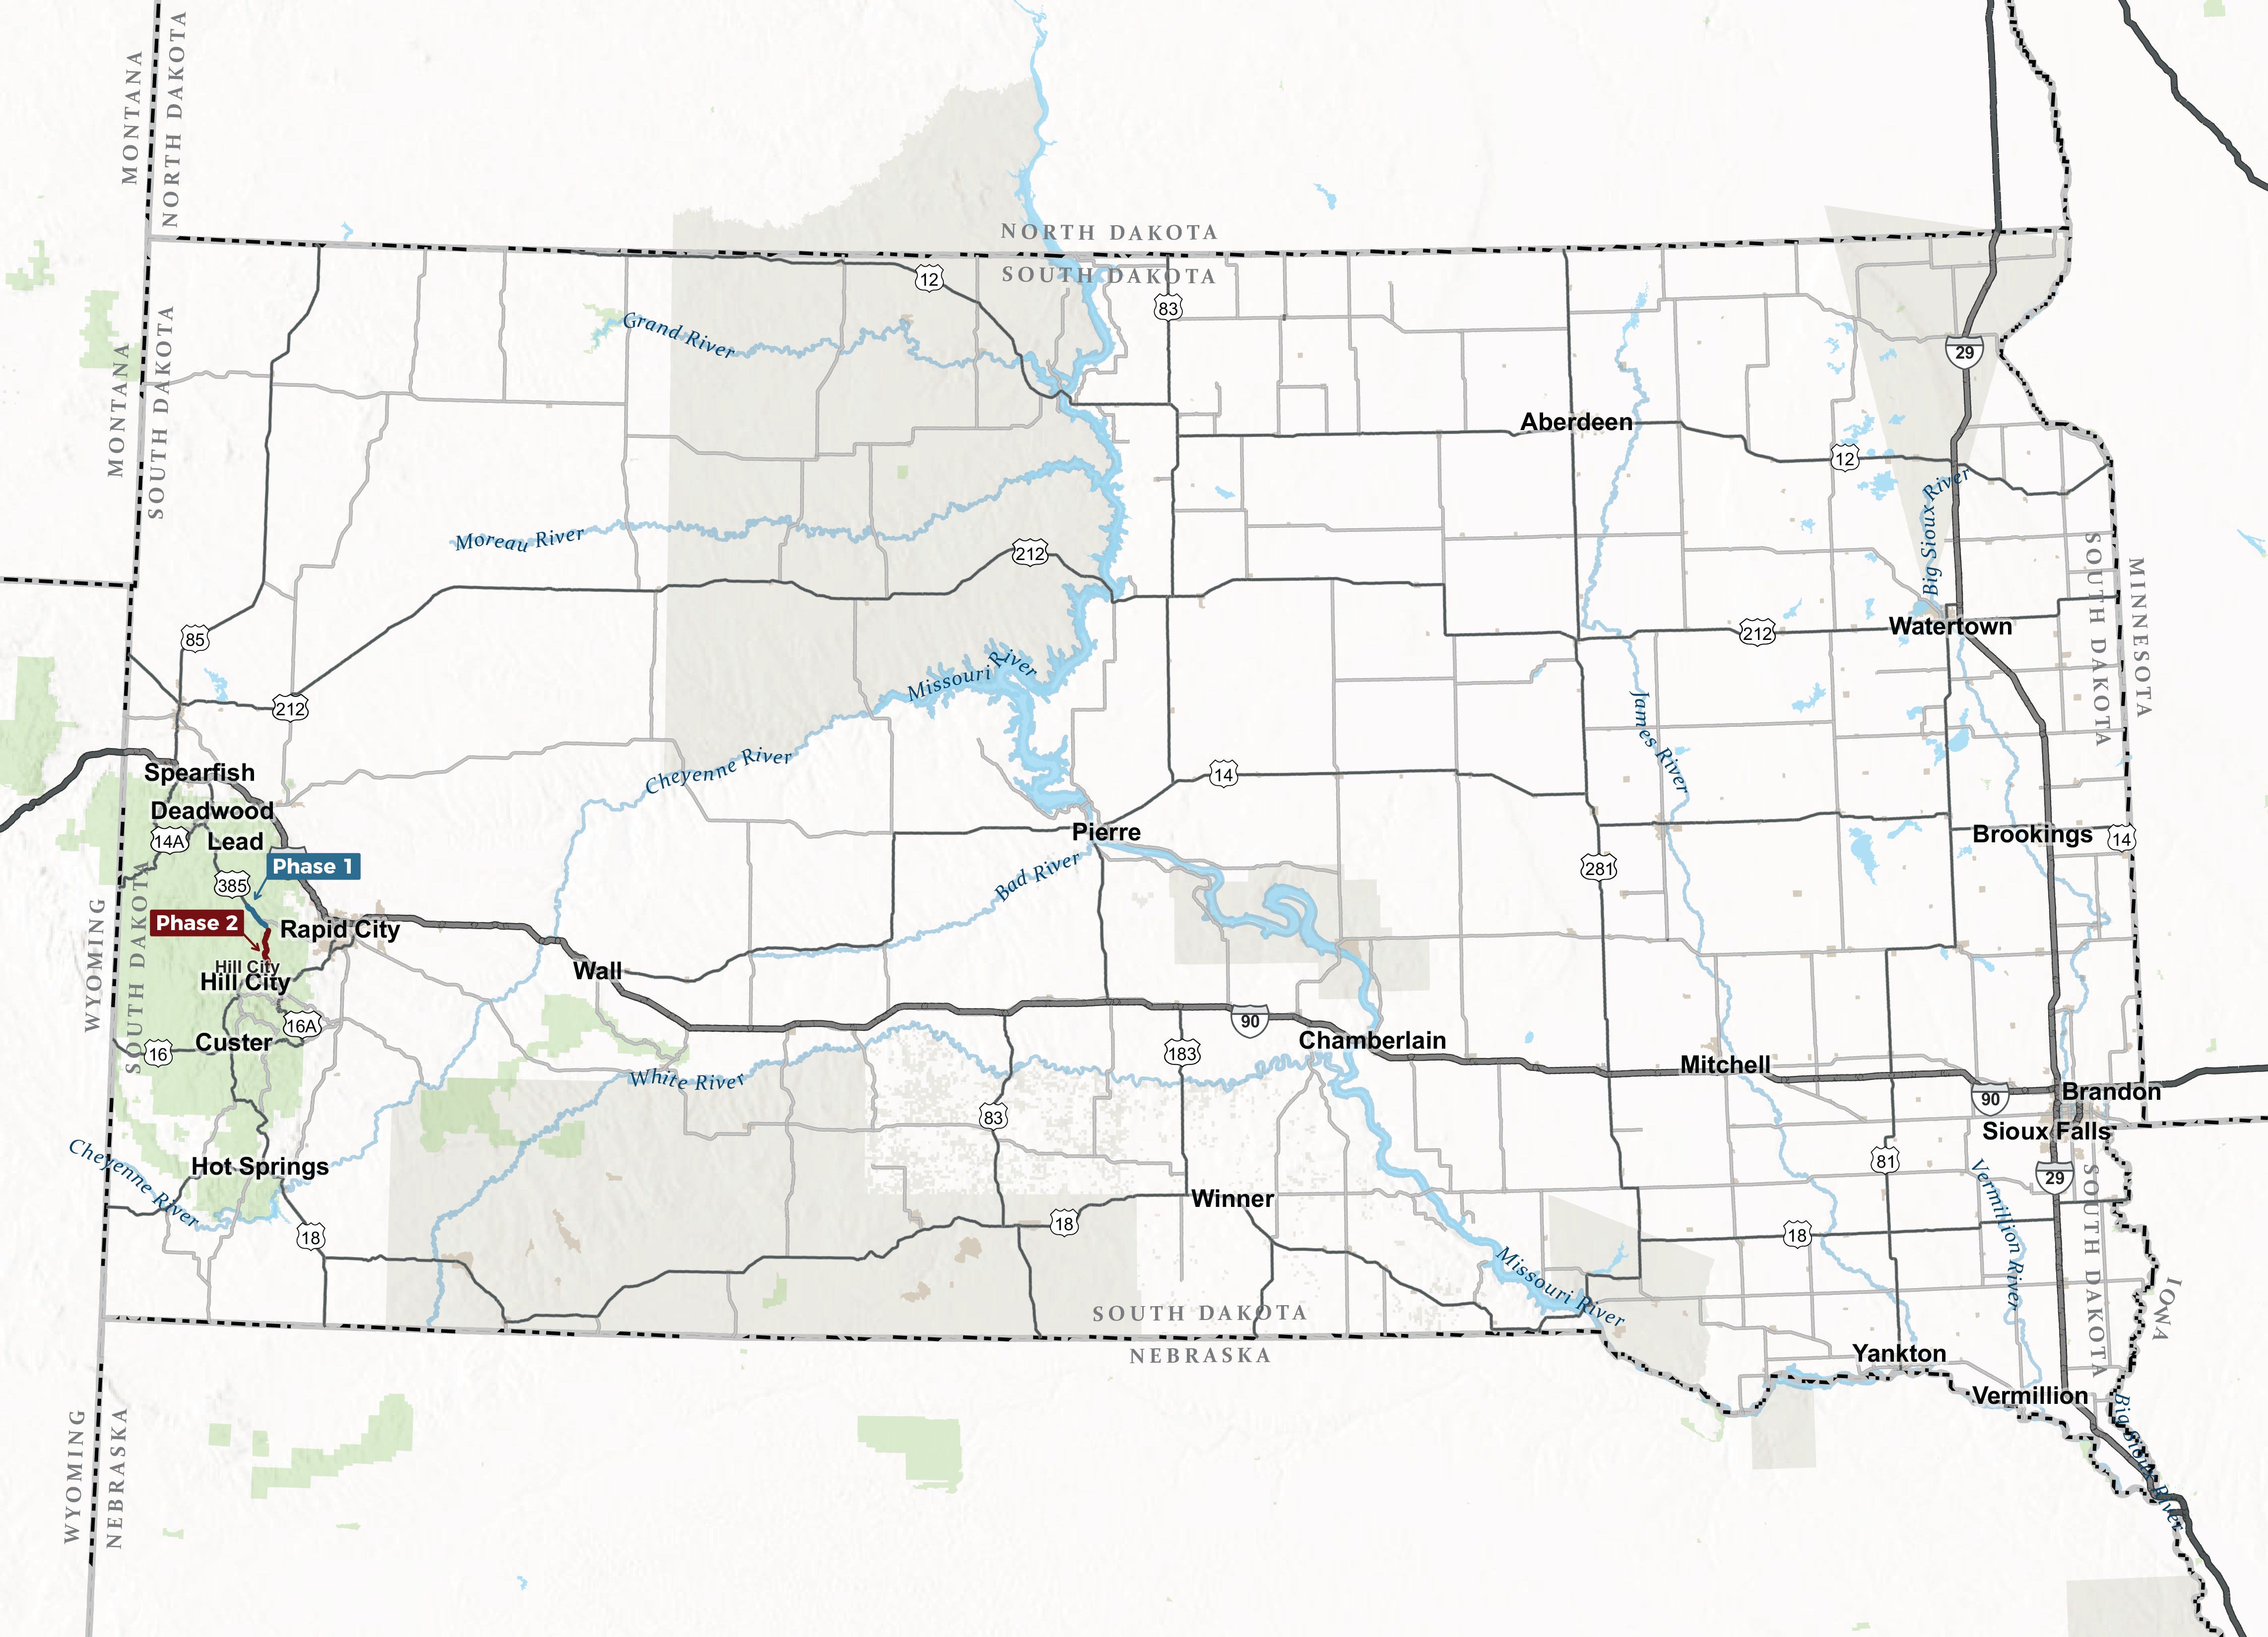 Inset Map on South Dakota